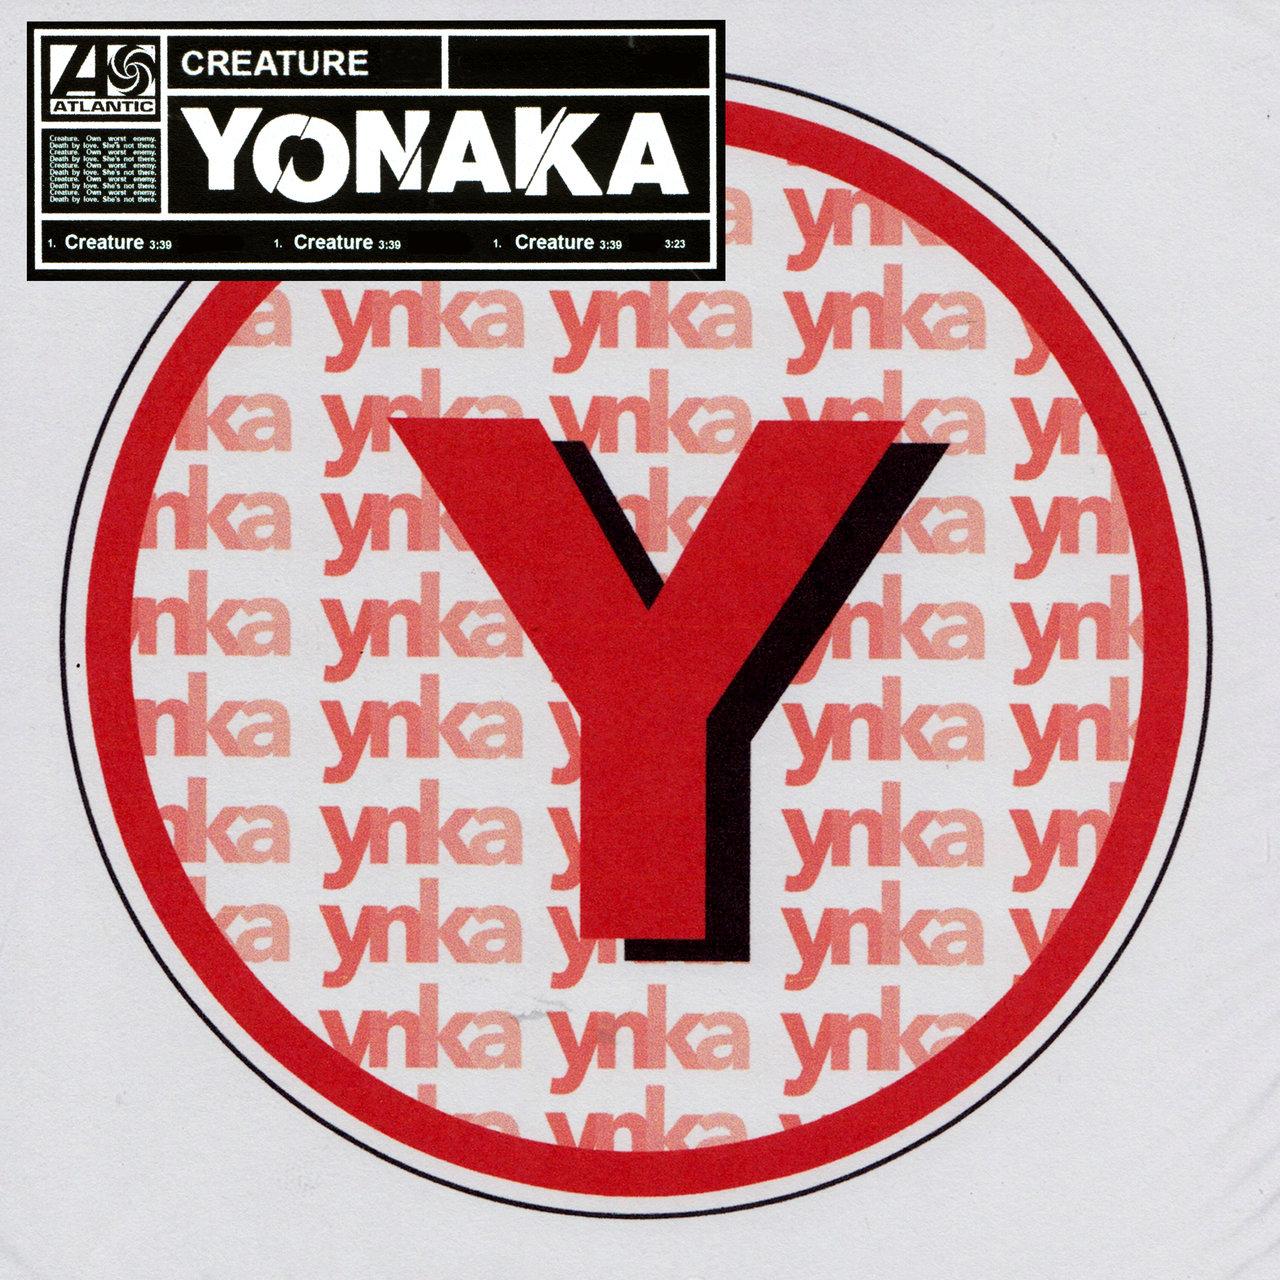 YONAKA — Creature cover artwork